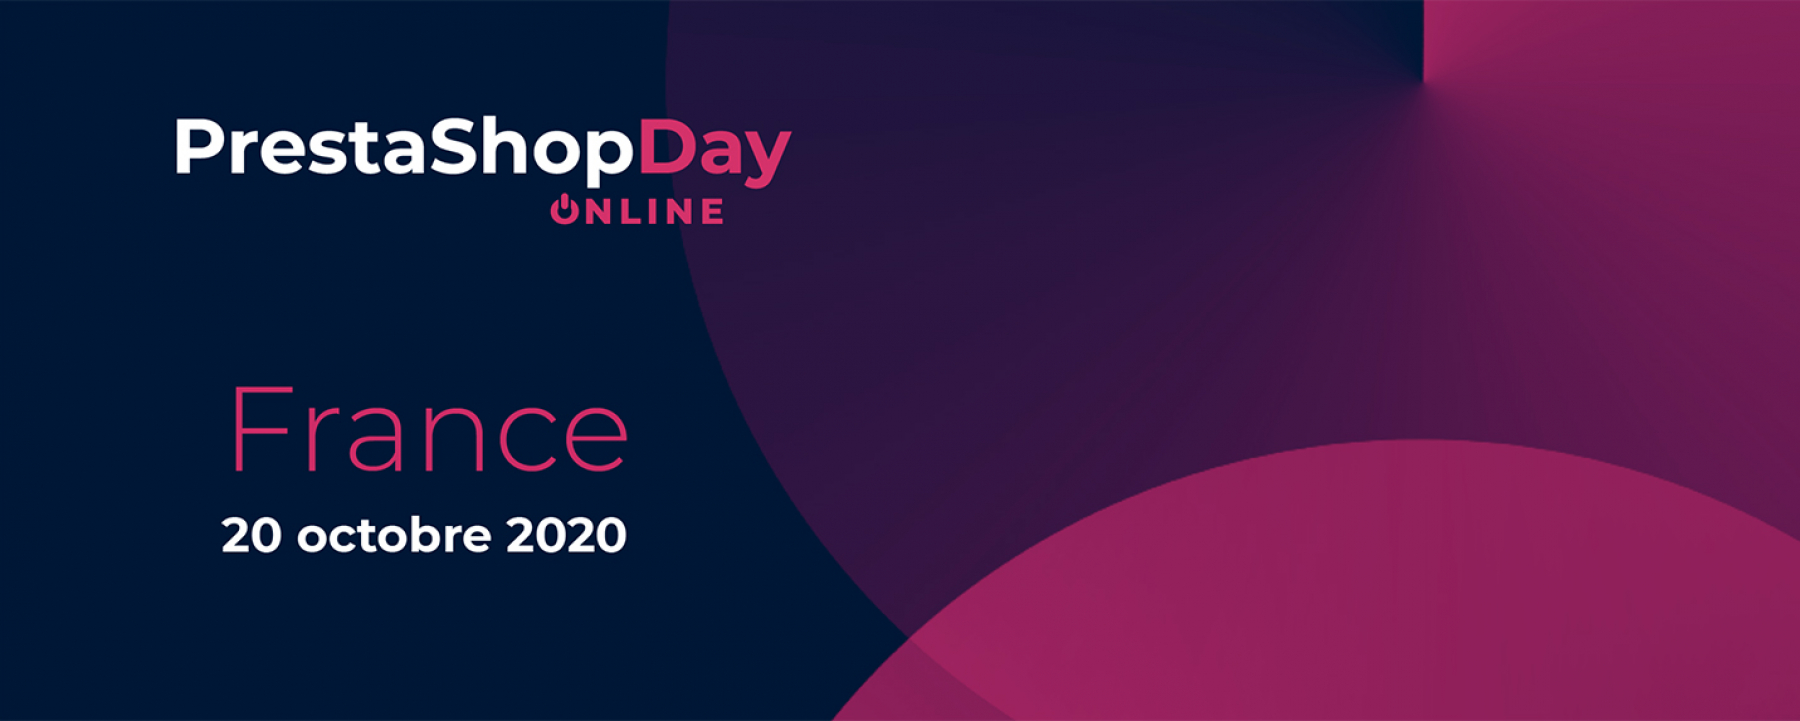 Salon Prestashop Day Online 2020, organisé par Prestashop, le 20 octobre 